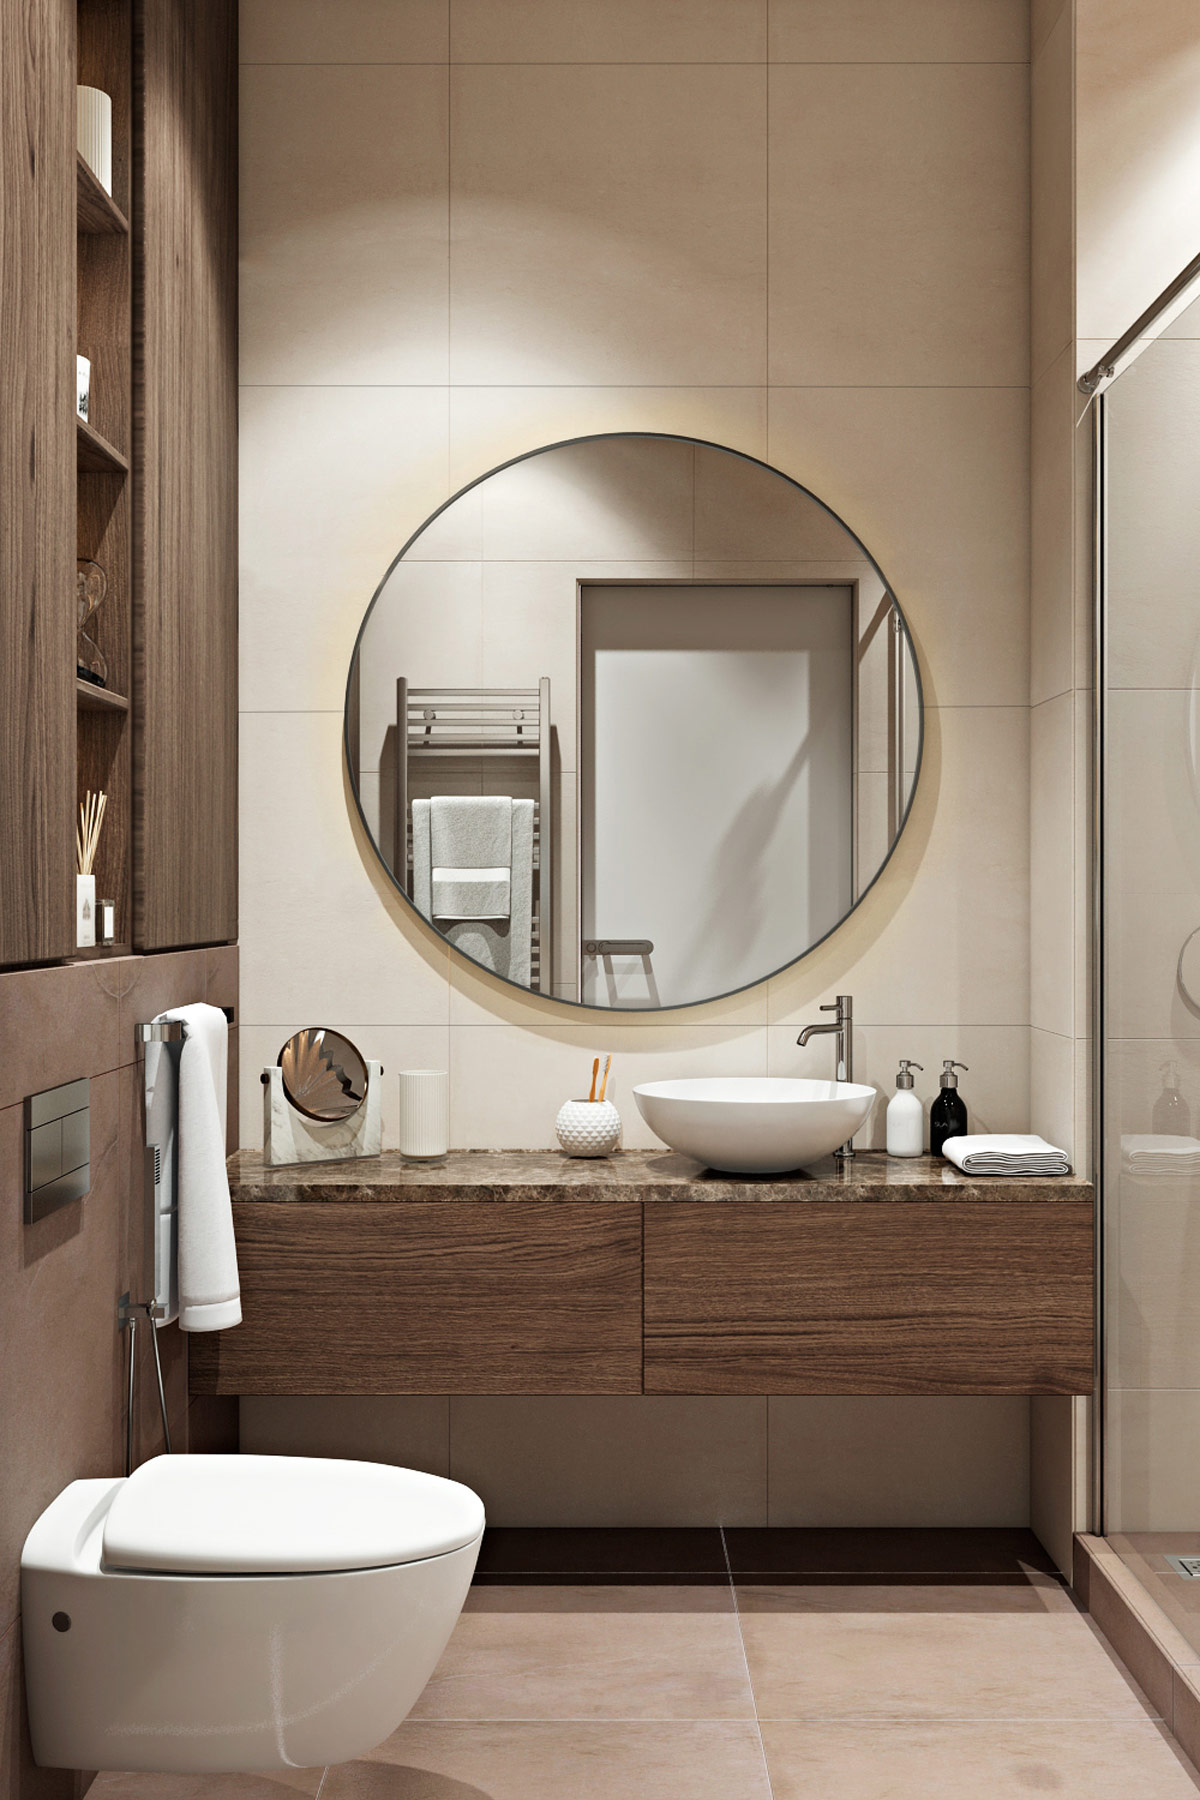 Wood Bathroom Vanity Interior Design, Bathroom Vanity With Round Mirror